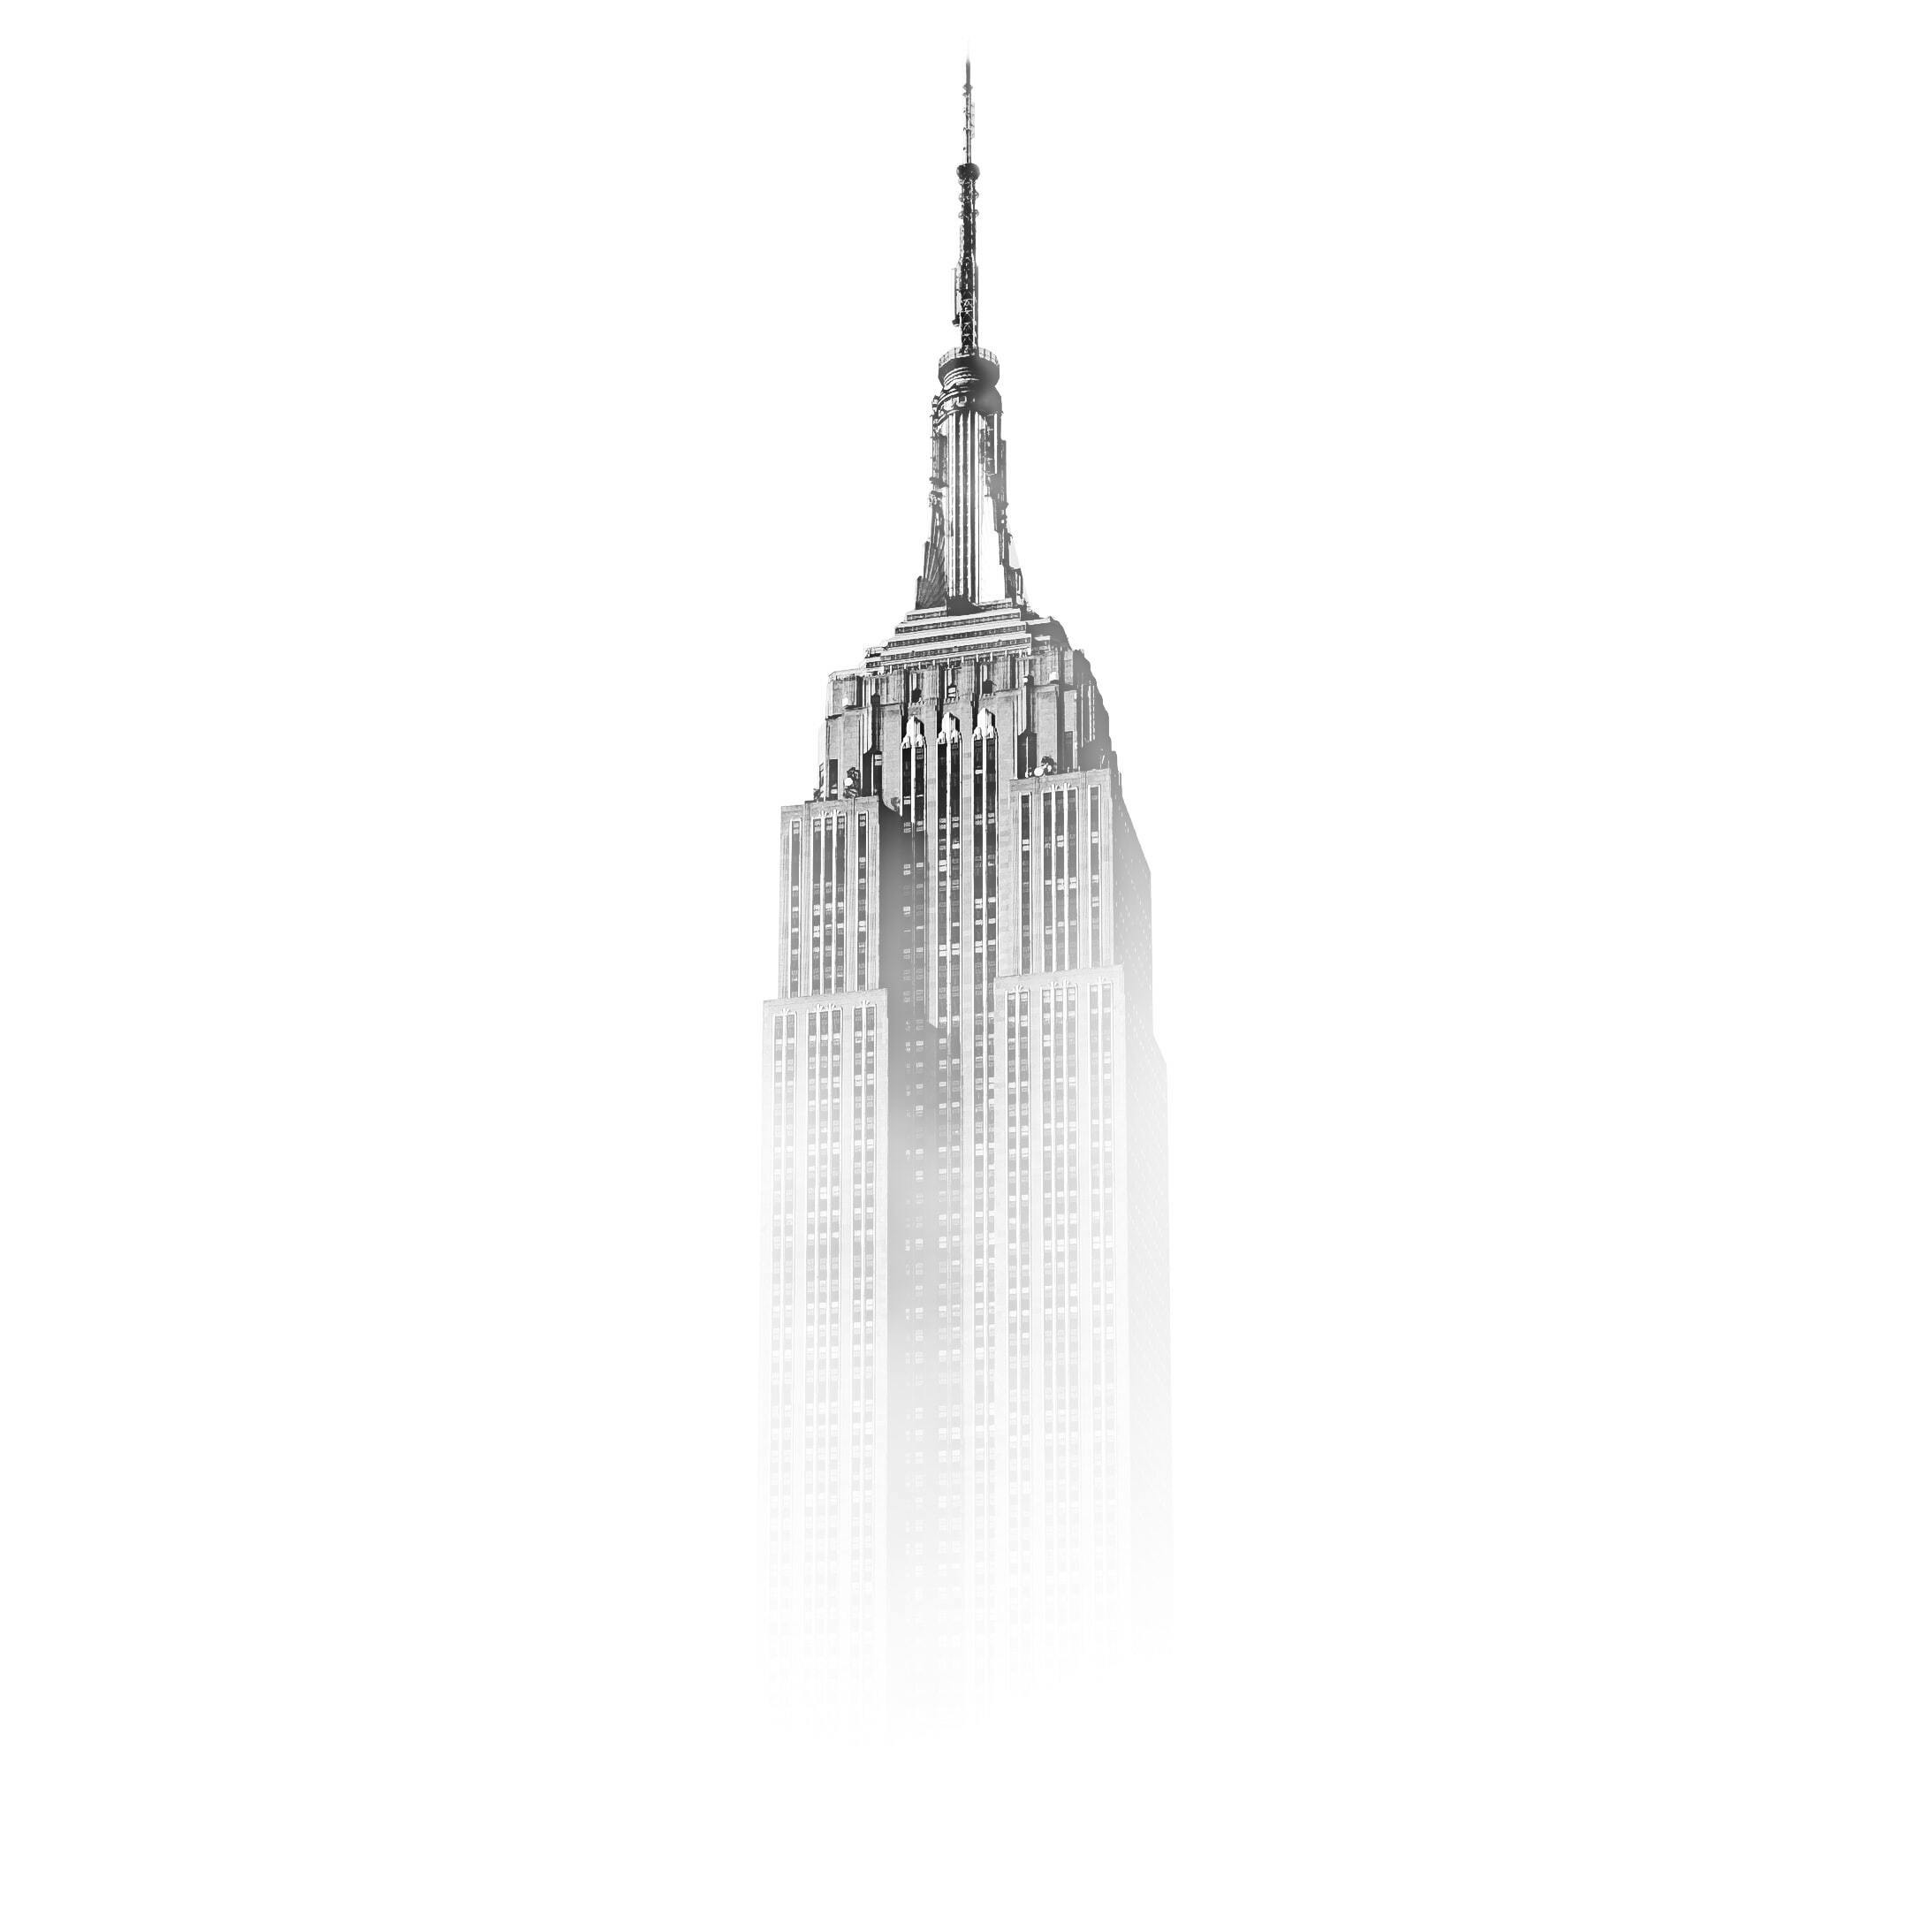 Mit Photoshop bearbeitetes Empire State Building